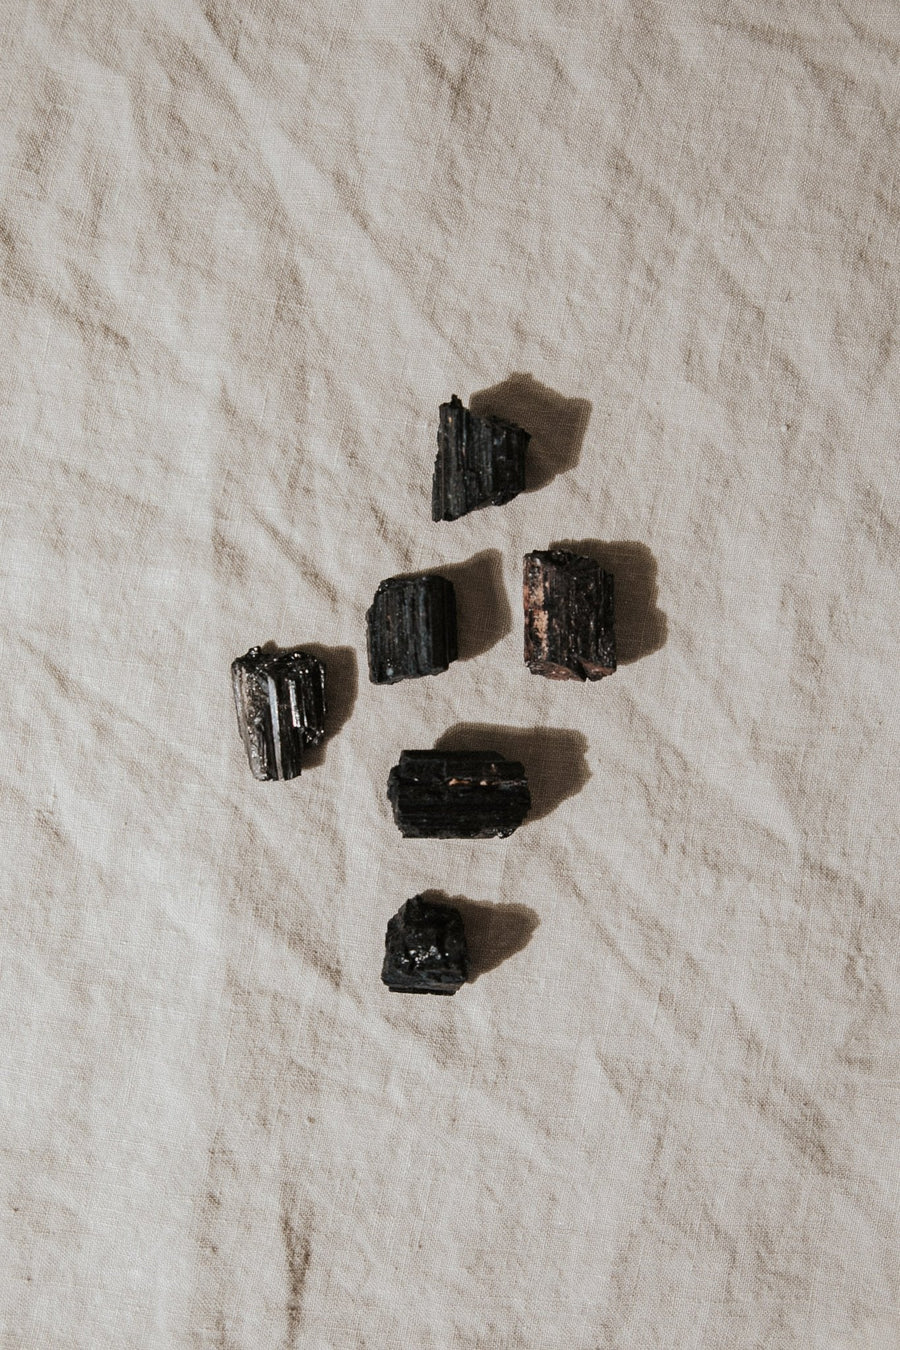 Pacific Beads Objects Black Tourmaline / FINAL SALE Black Tourmaline